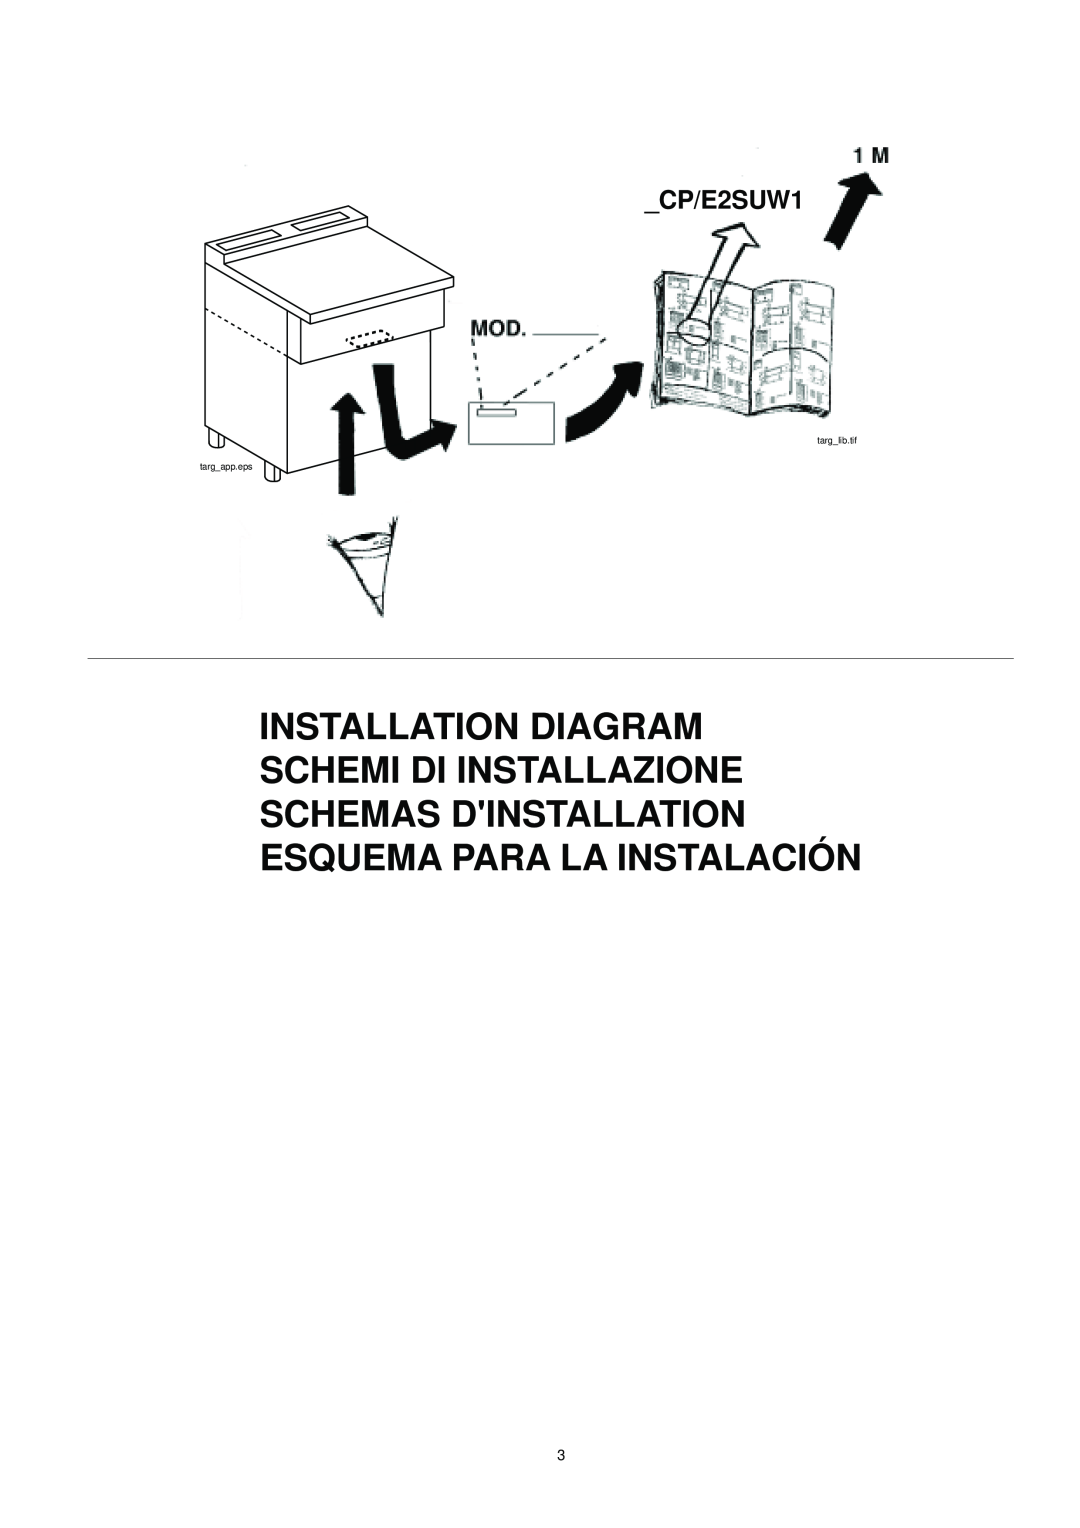 Electrolux PR 700 manual CP/E2SUW1, targ lib.tif targ app.eps 